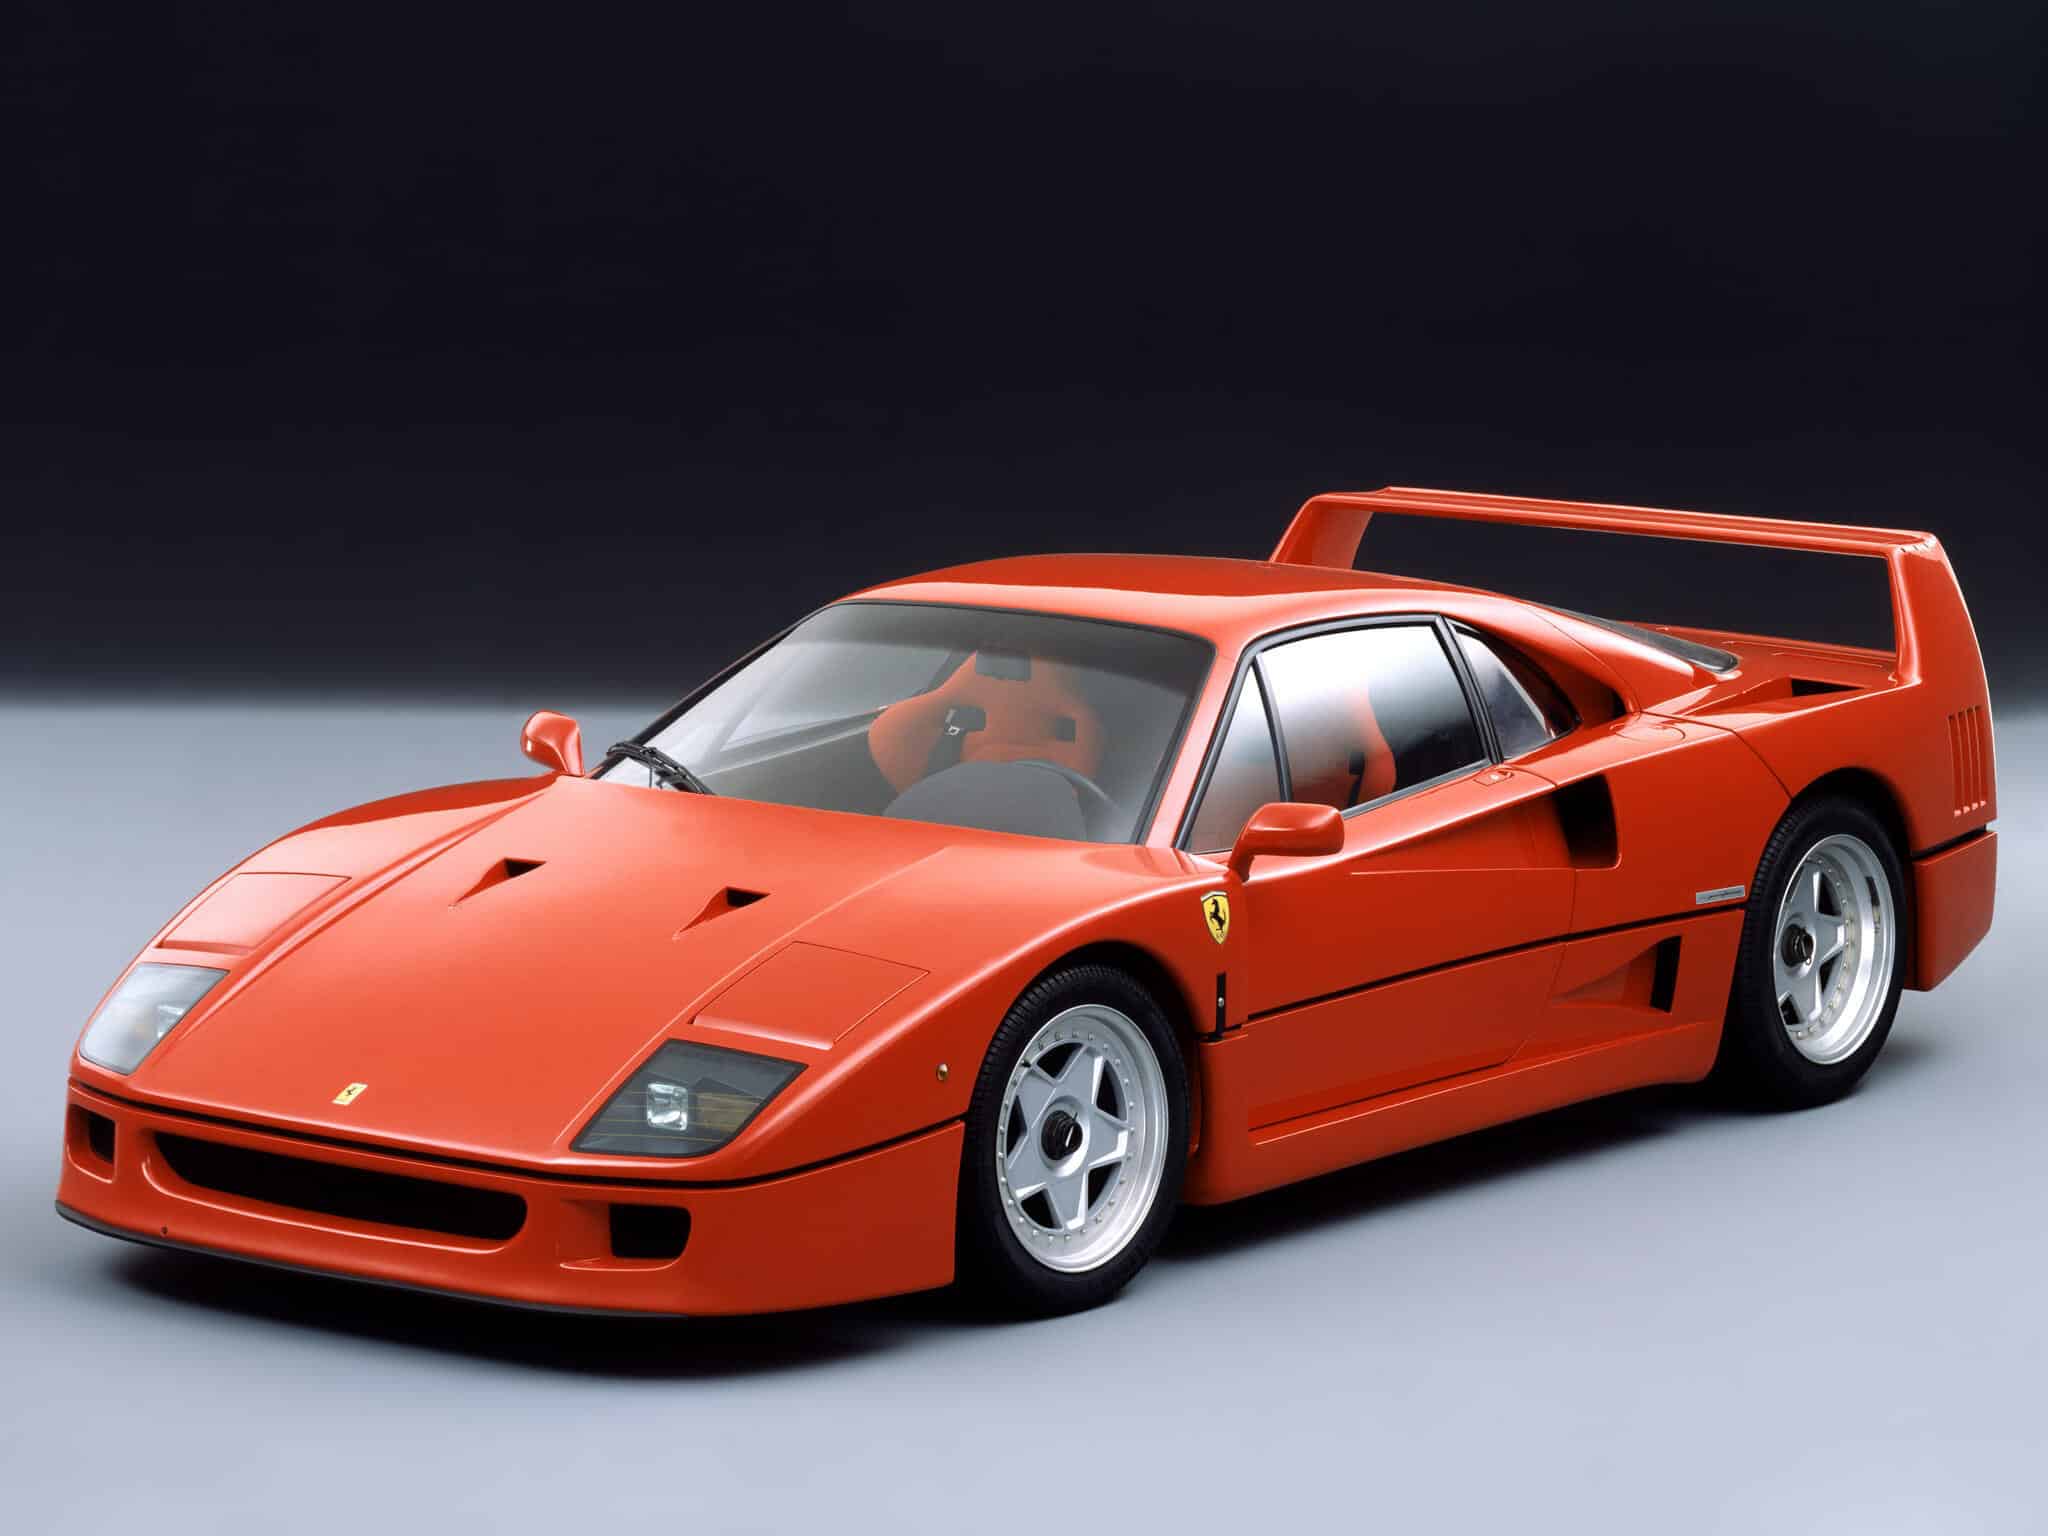 Ferrari F40, Évolutions et caractéristiques